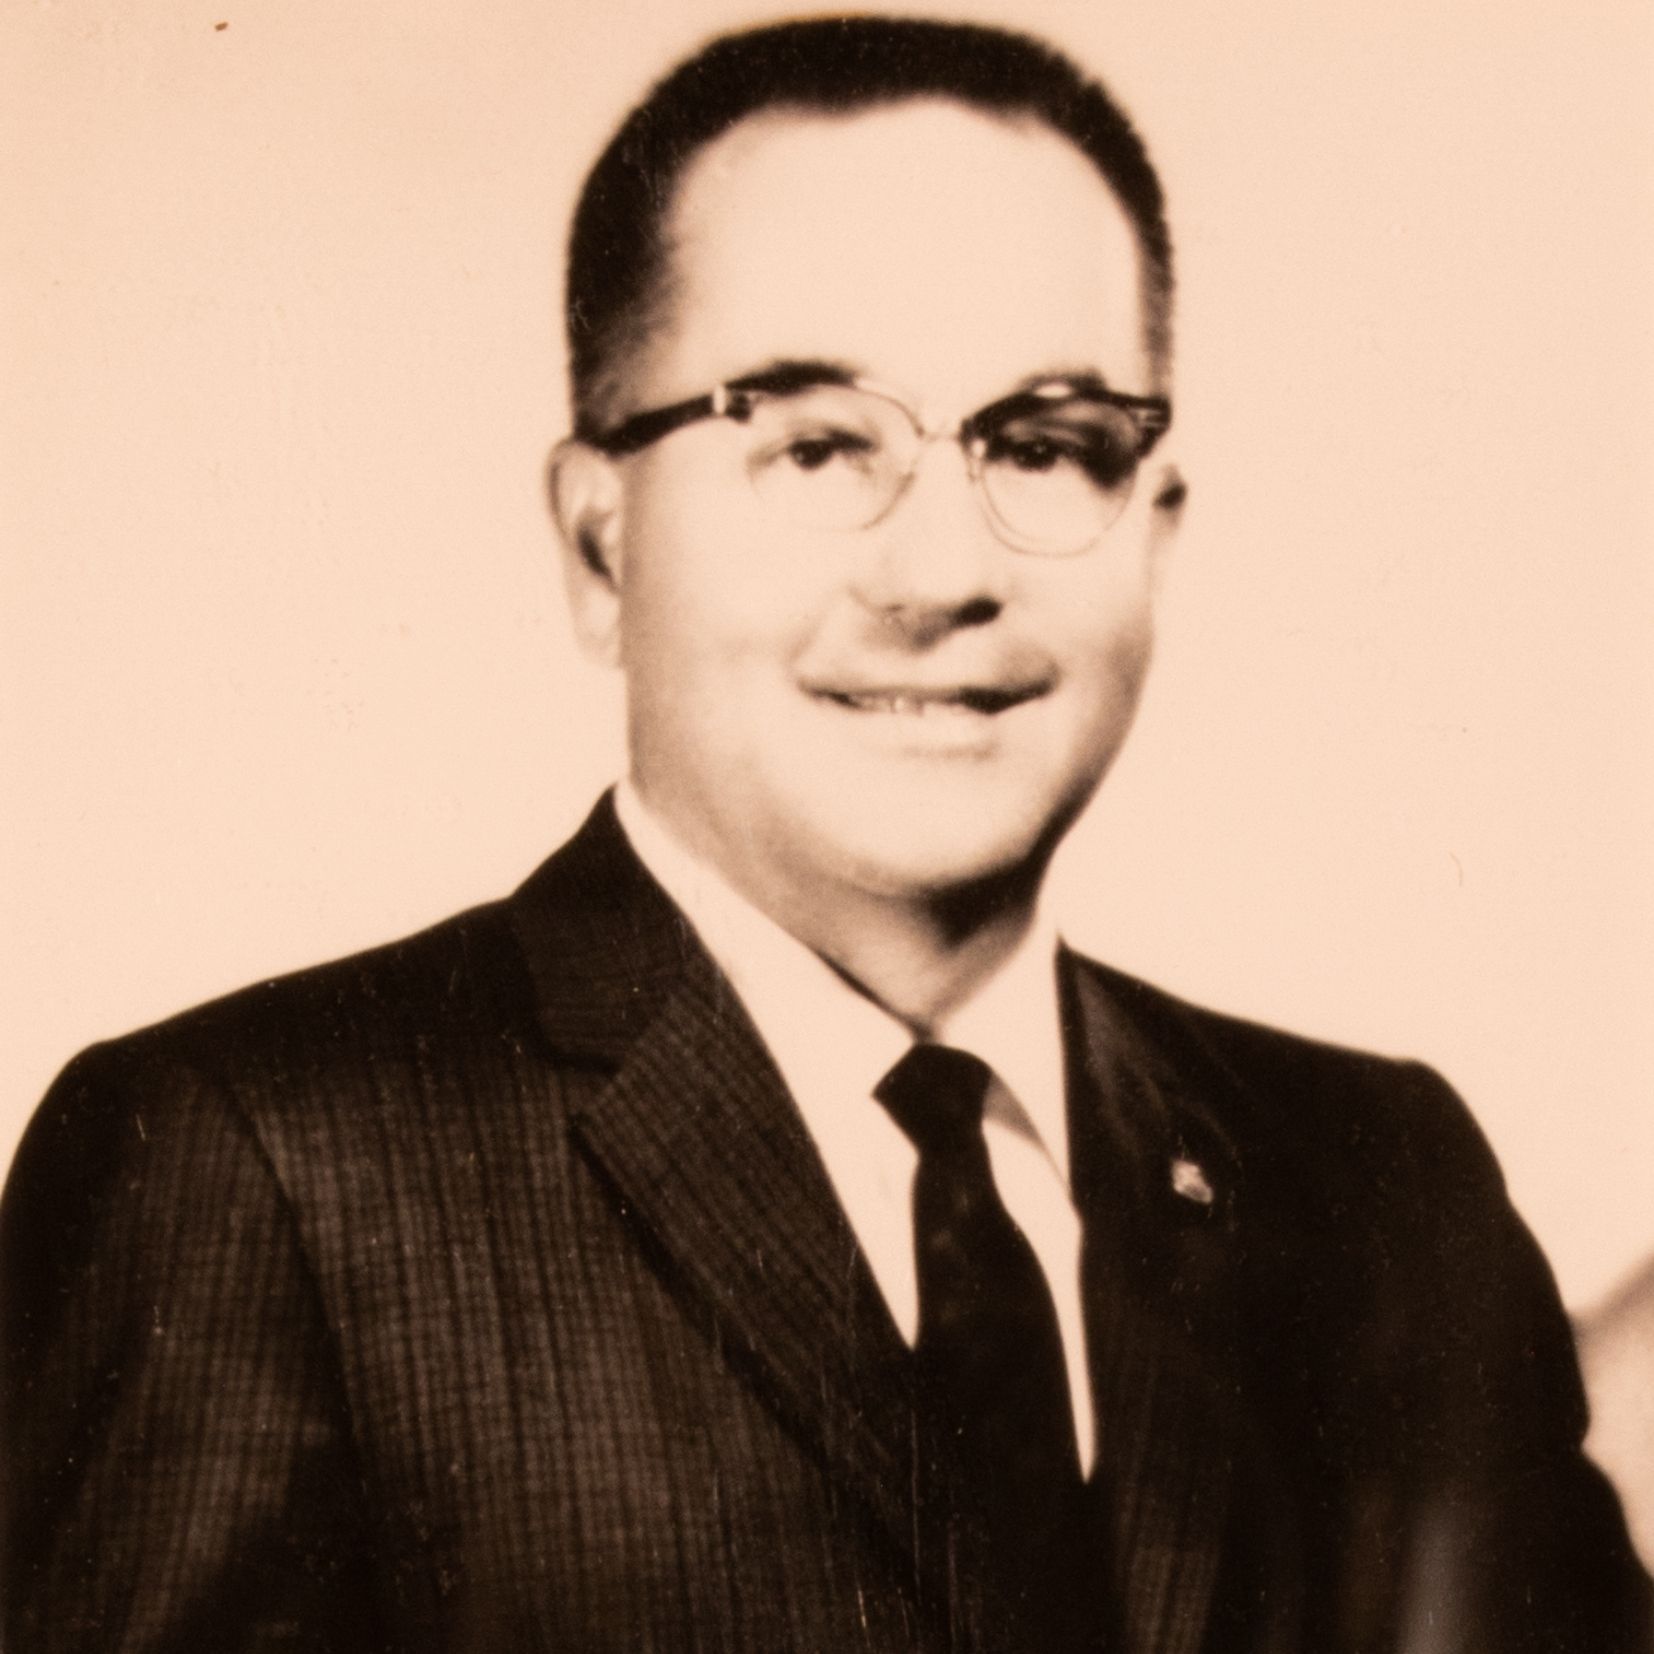 Mayor Calvin Swenson